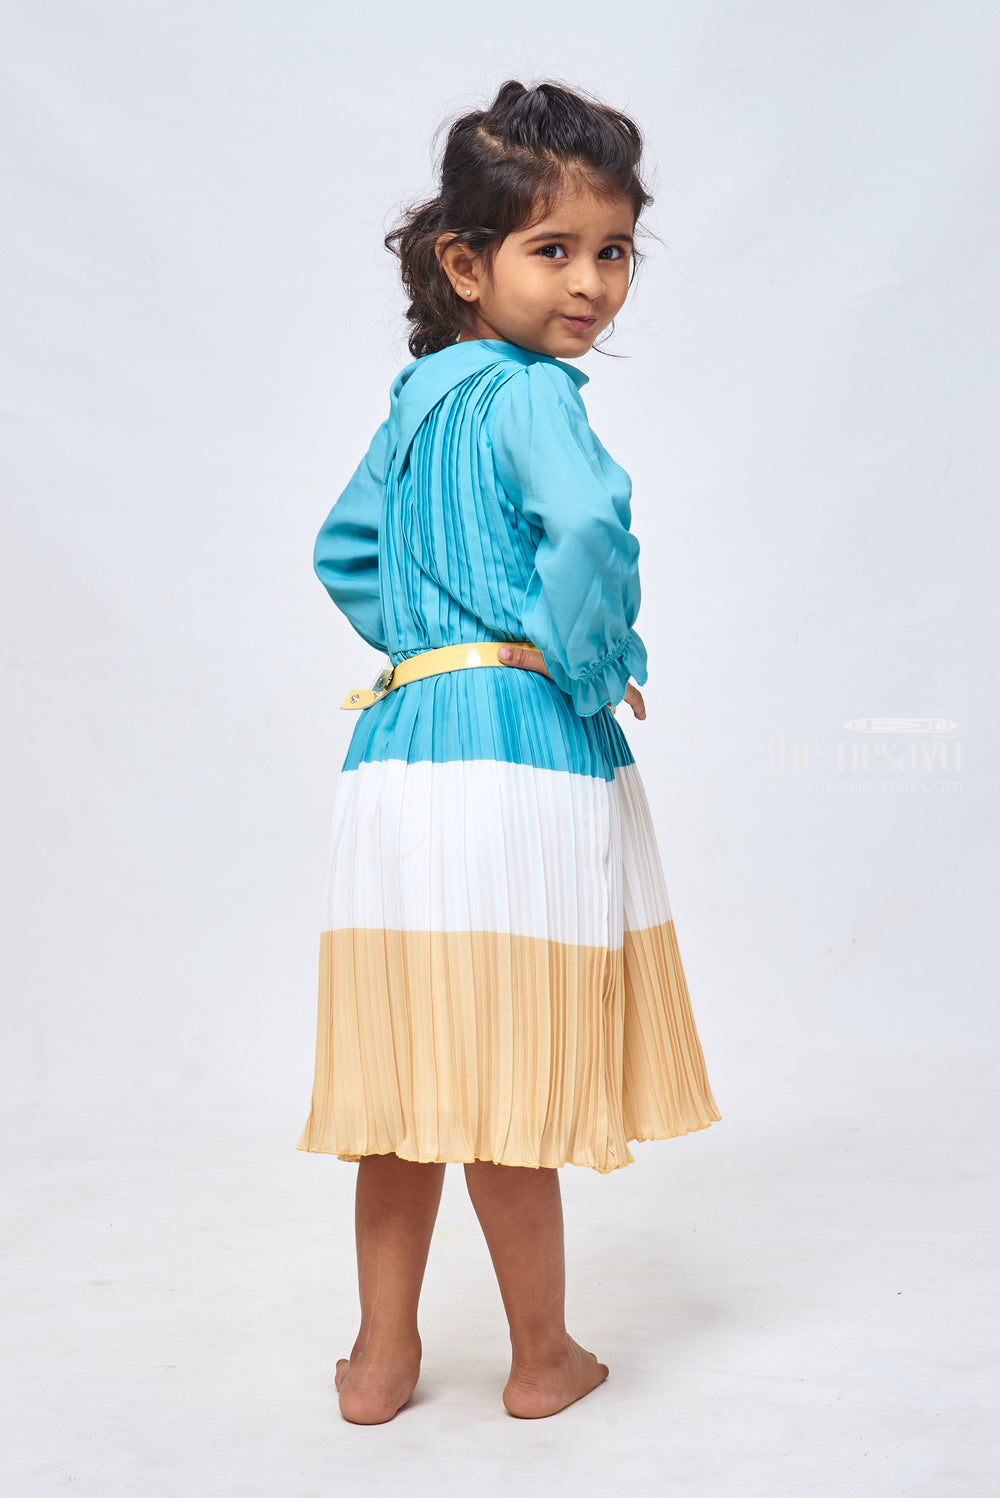 The Nesavu Girls Fancy Frock Green Ombre Beauty: Fashionable Cotton Frock for Girls Nesavu Cotton Frock Knee Length | Cotton Frock for 2 3 Year Kid | the Nesavu